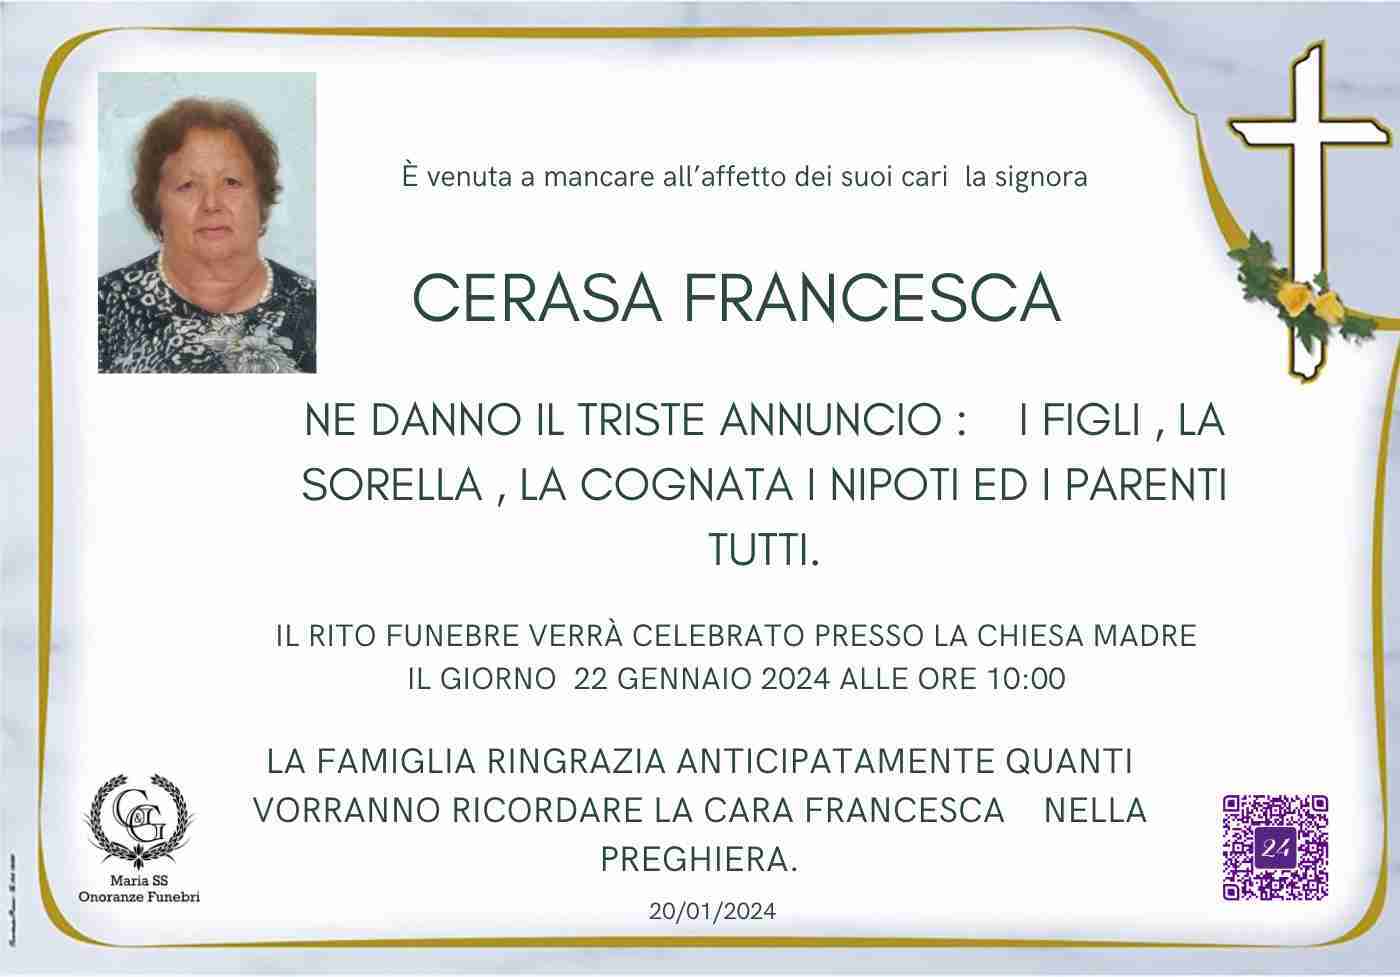 Francesca Cerasa